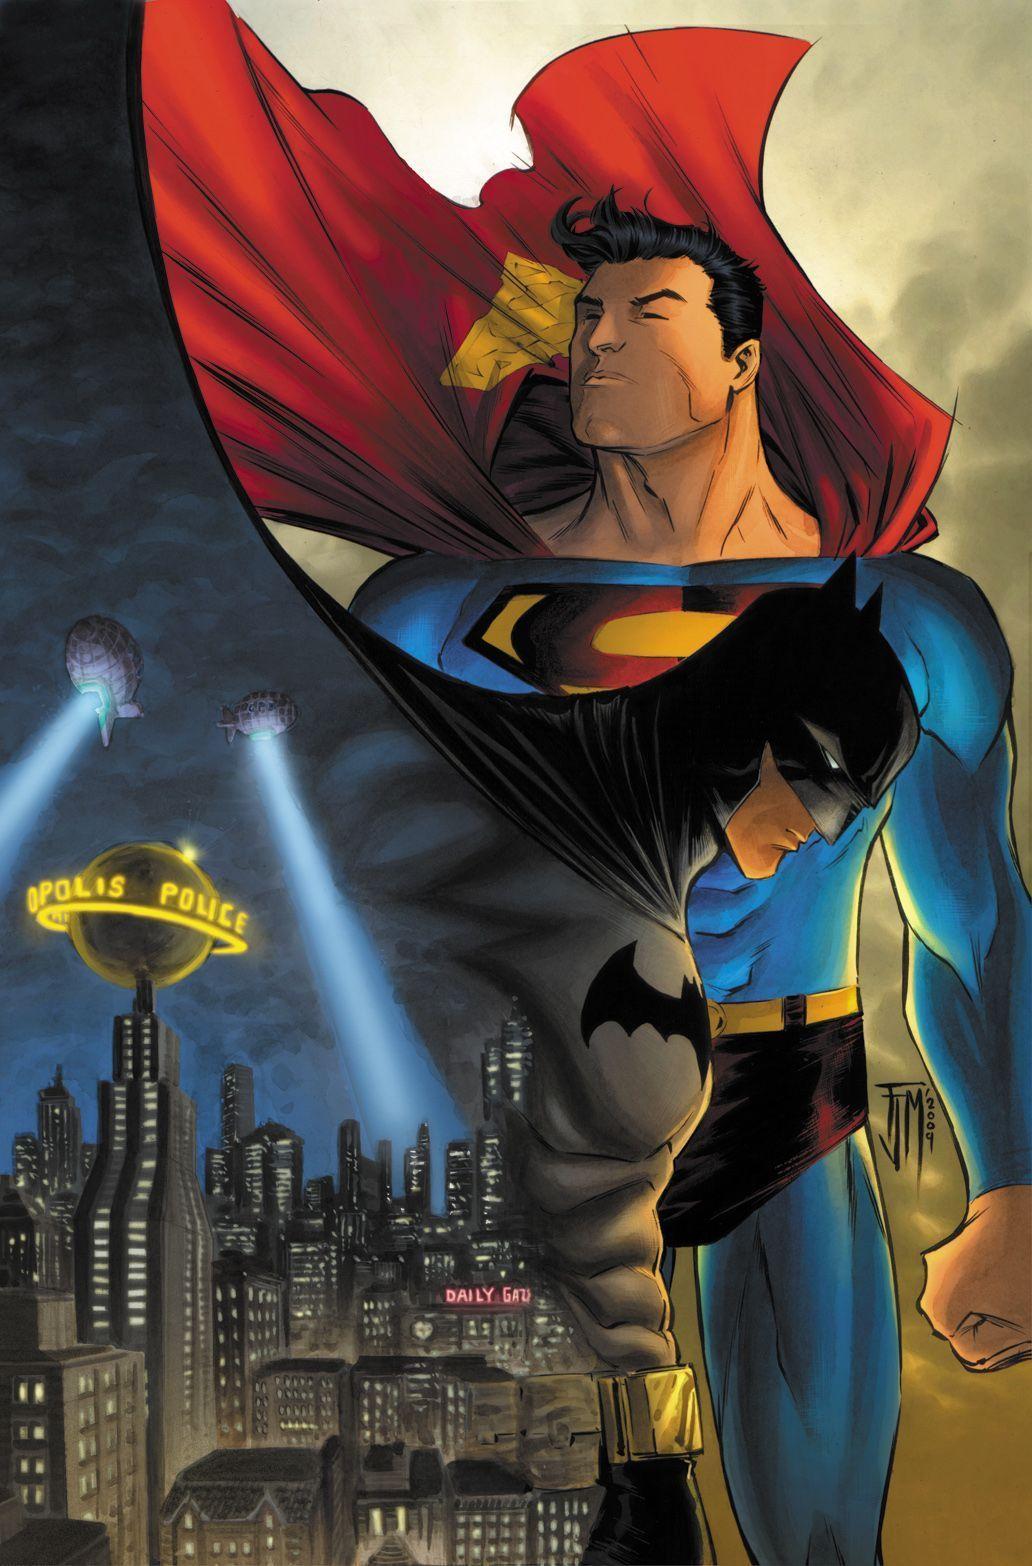 Superman Cartoonic Art Wallpapers